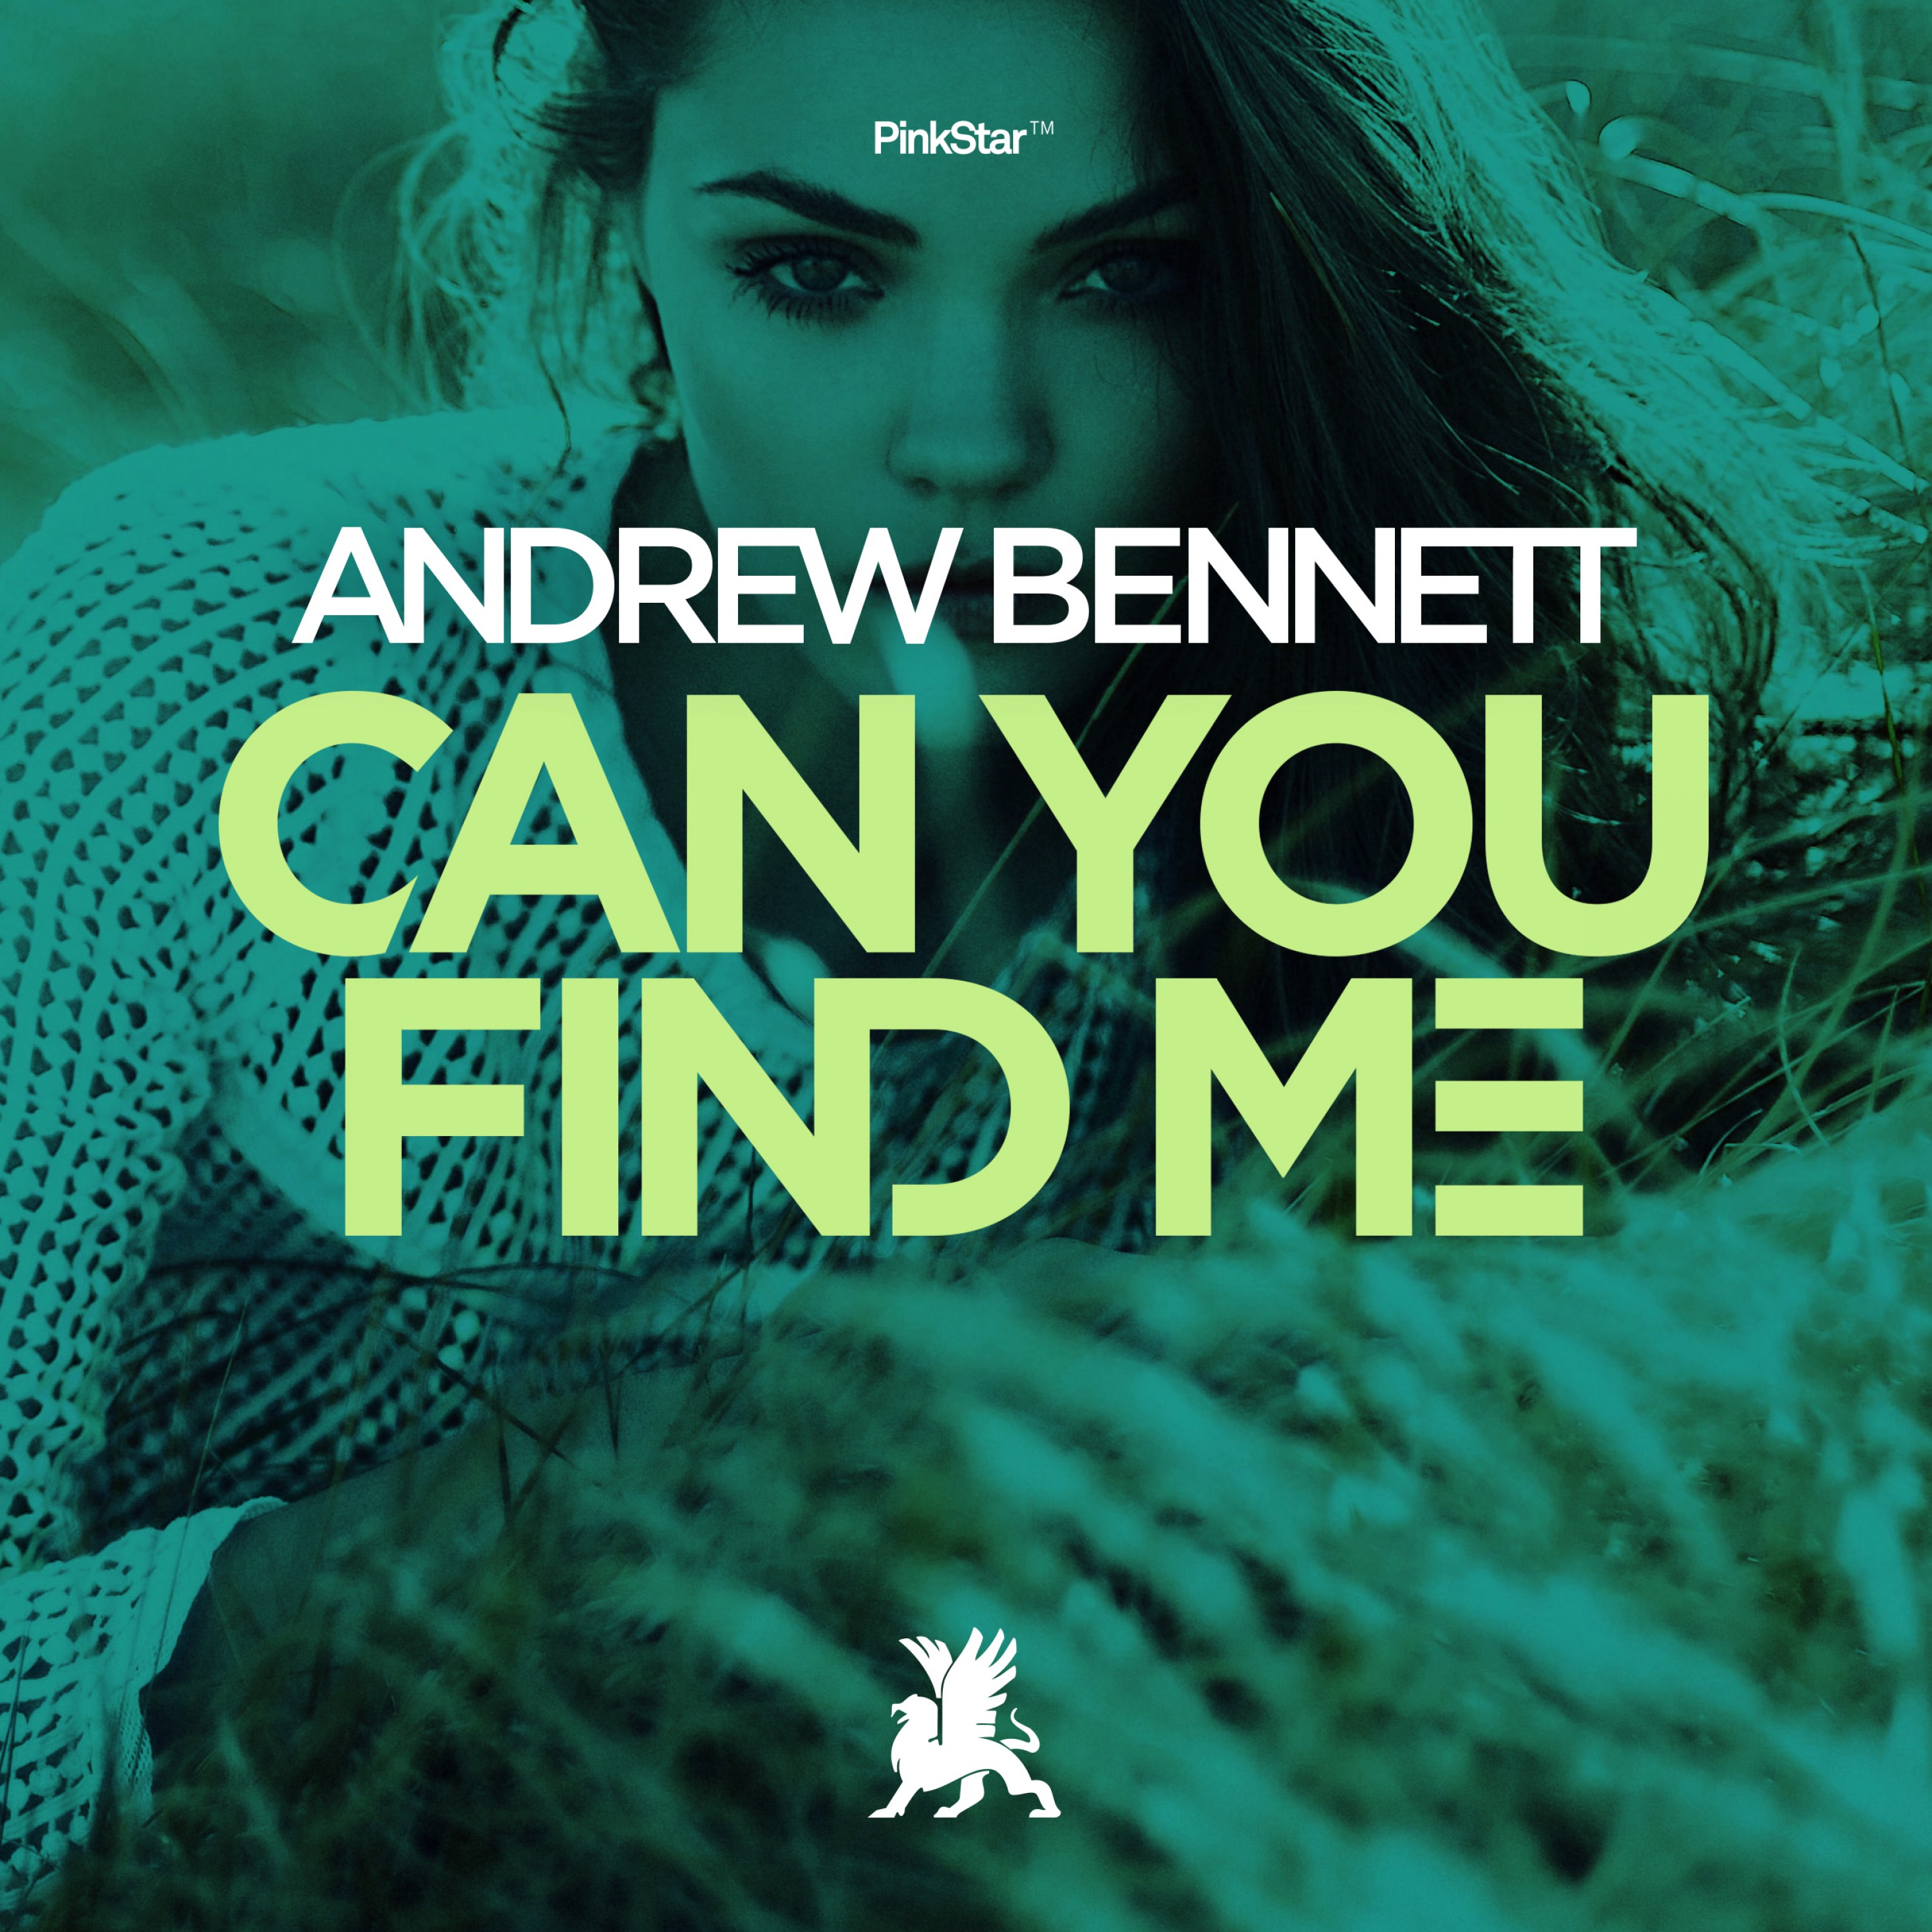 Can You Find Me (Original Mix)